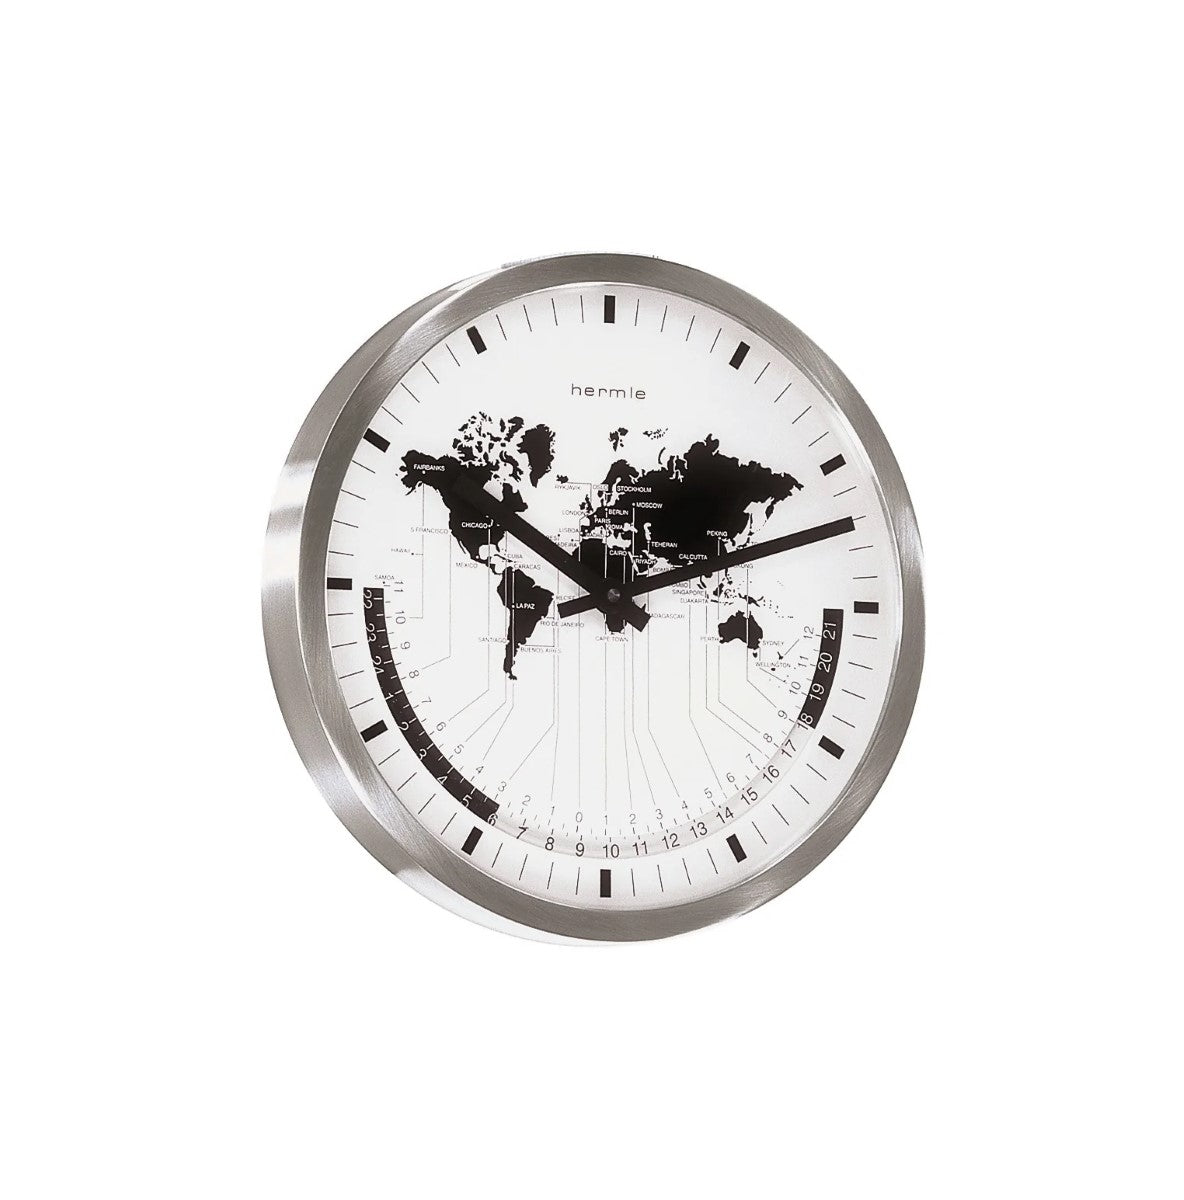 Hermle Airport World Time Quartz Wall Clock, 30504002100